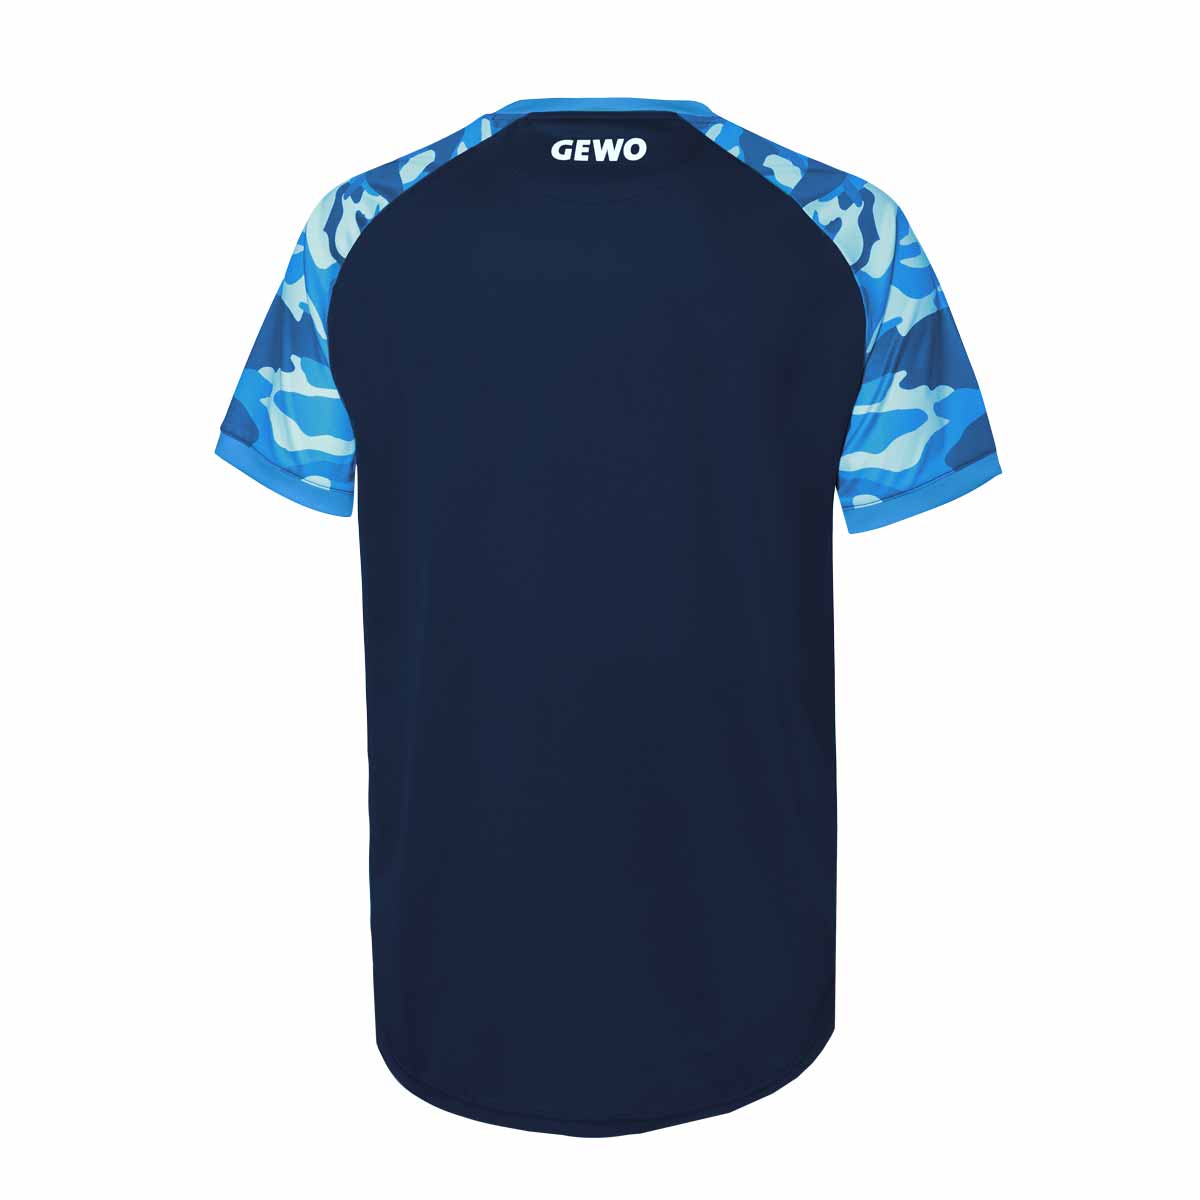 GEWO T-Shirt Riba navy/blue XXXXS